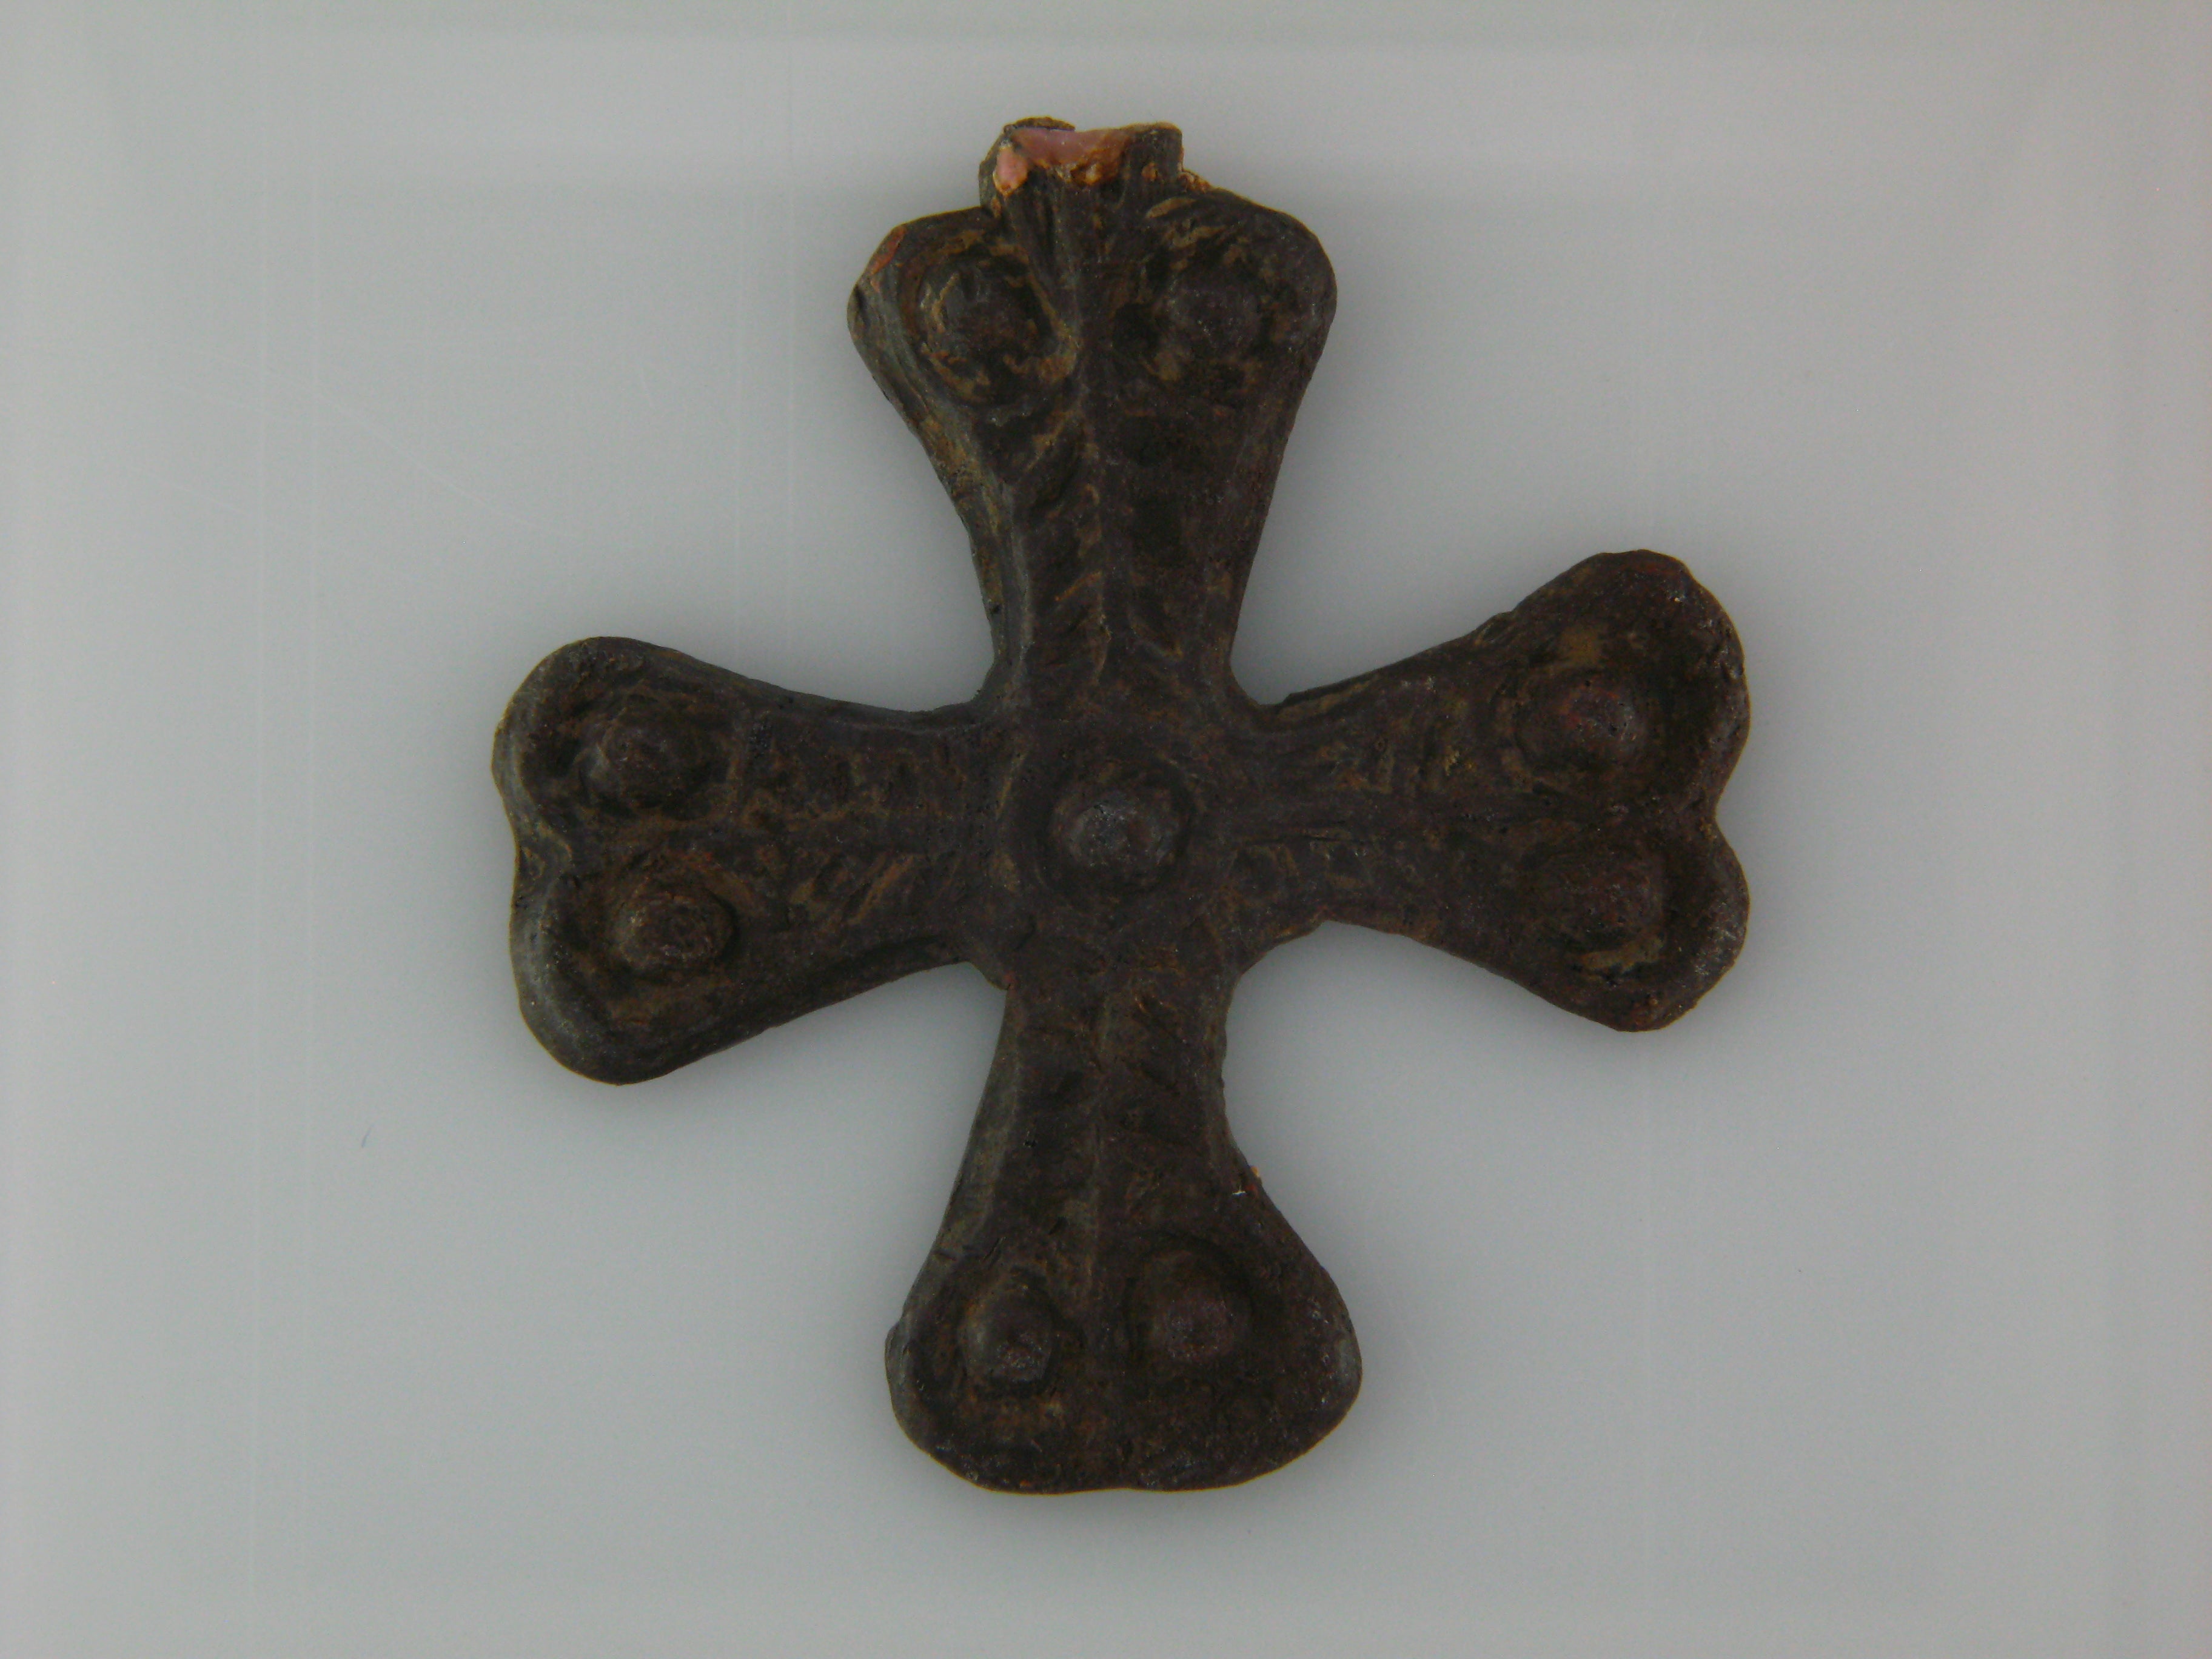 Obverse of original, Byzantine era cross.